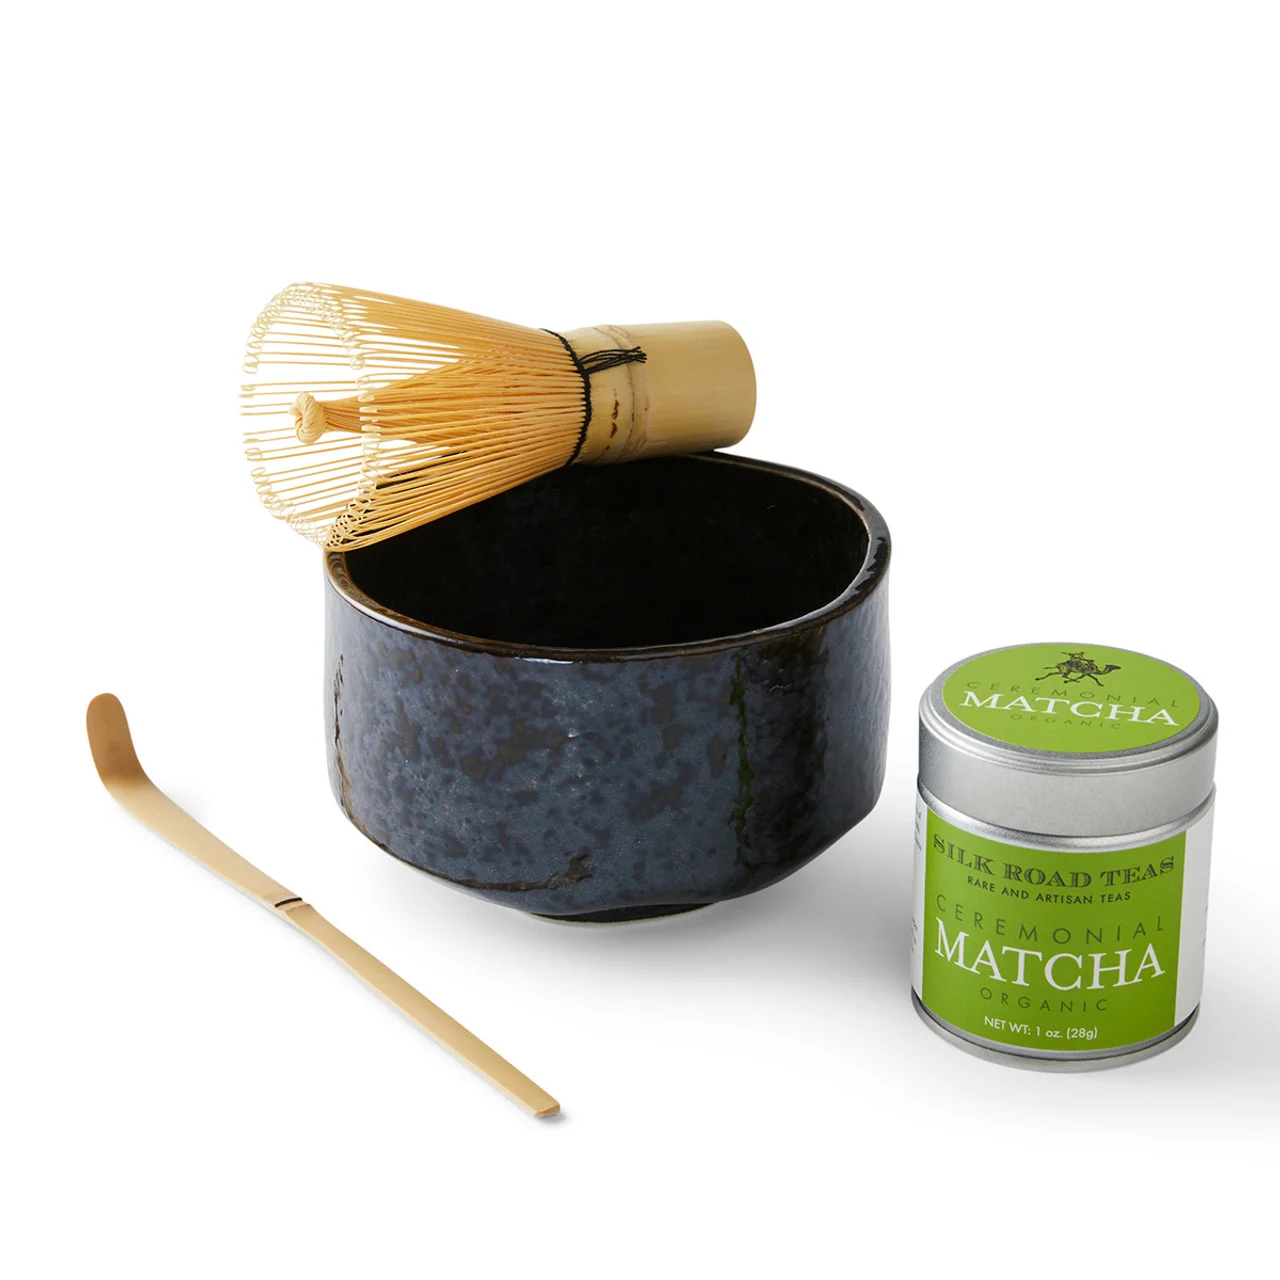 Ceremonial Matcha Gift Set from Silk Road Teas.